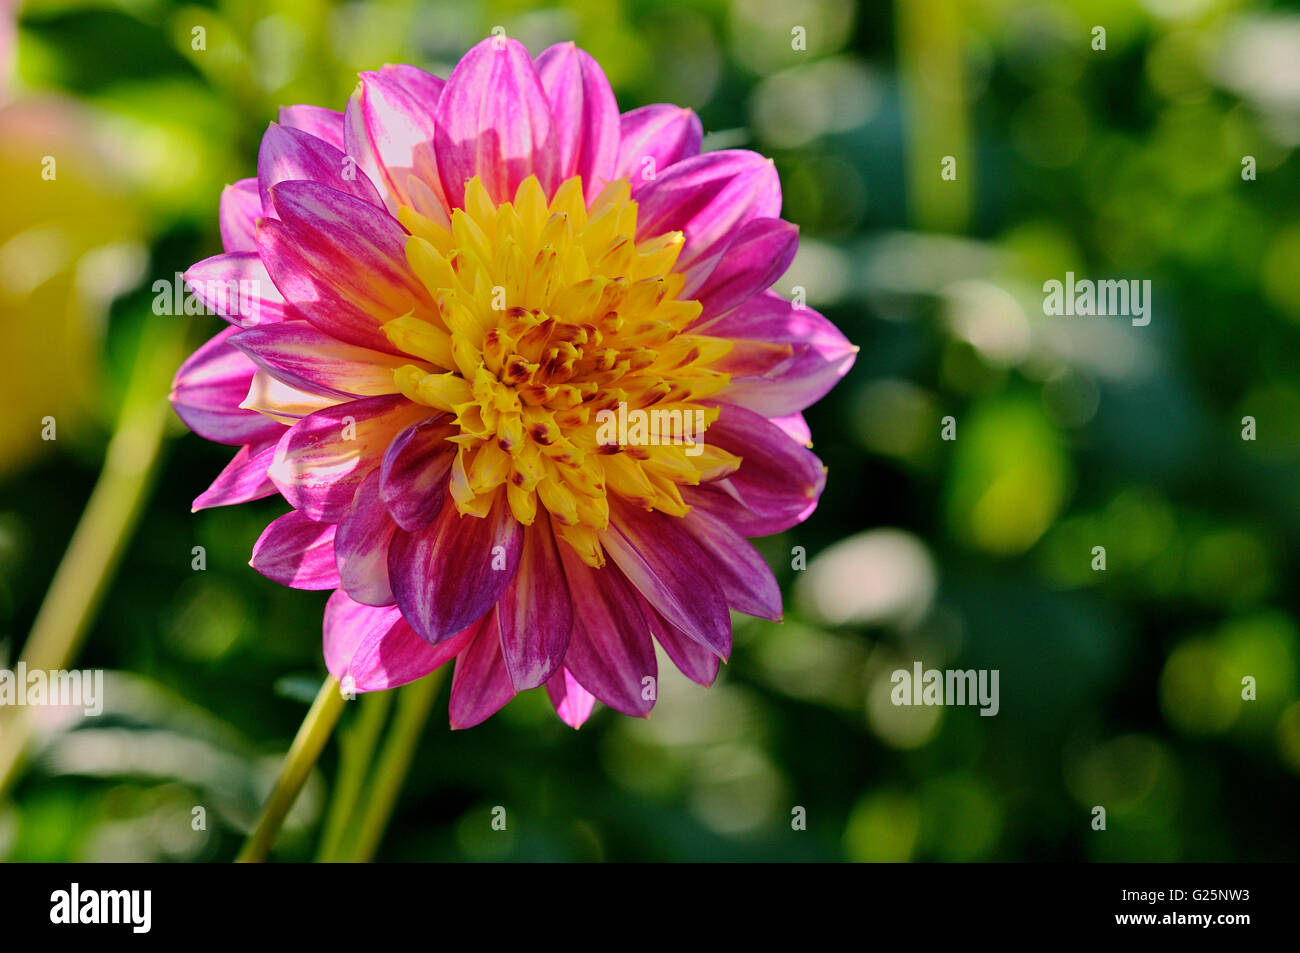 Gartendahlie (Dahlia), Variety Boogie Woogie, pink-yellow flower, North Rhine-Westphalia, Germany Stock Photo